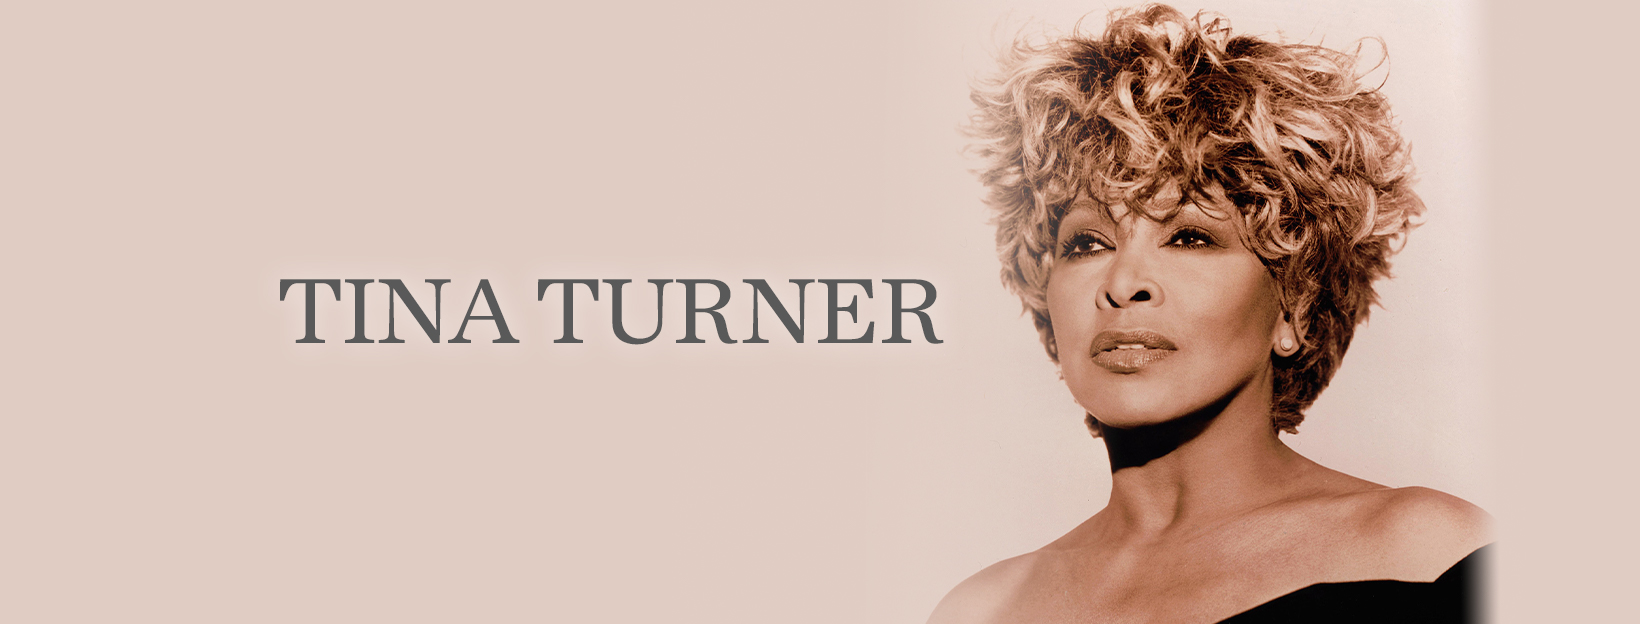 Tina Turner elhunyt